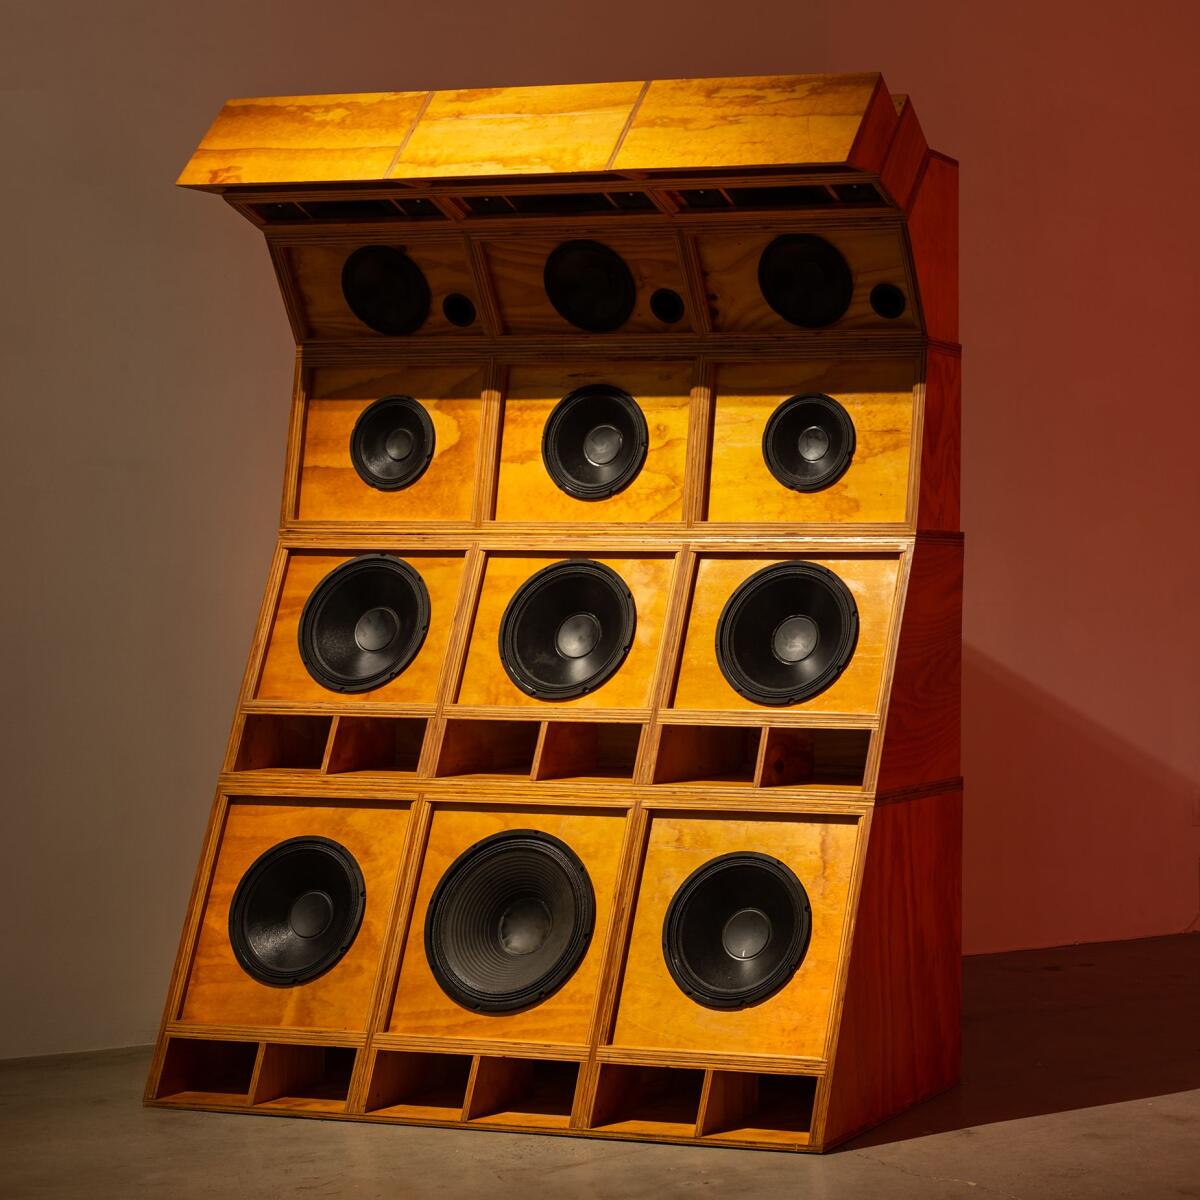 Cosmo Whyte’s Sole Imperial, 2019, plywood, 12 speakers, 3 horns, 15 tweeters.